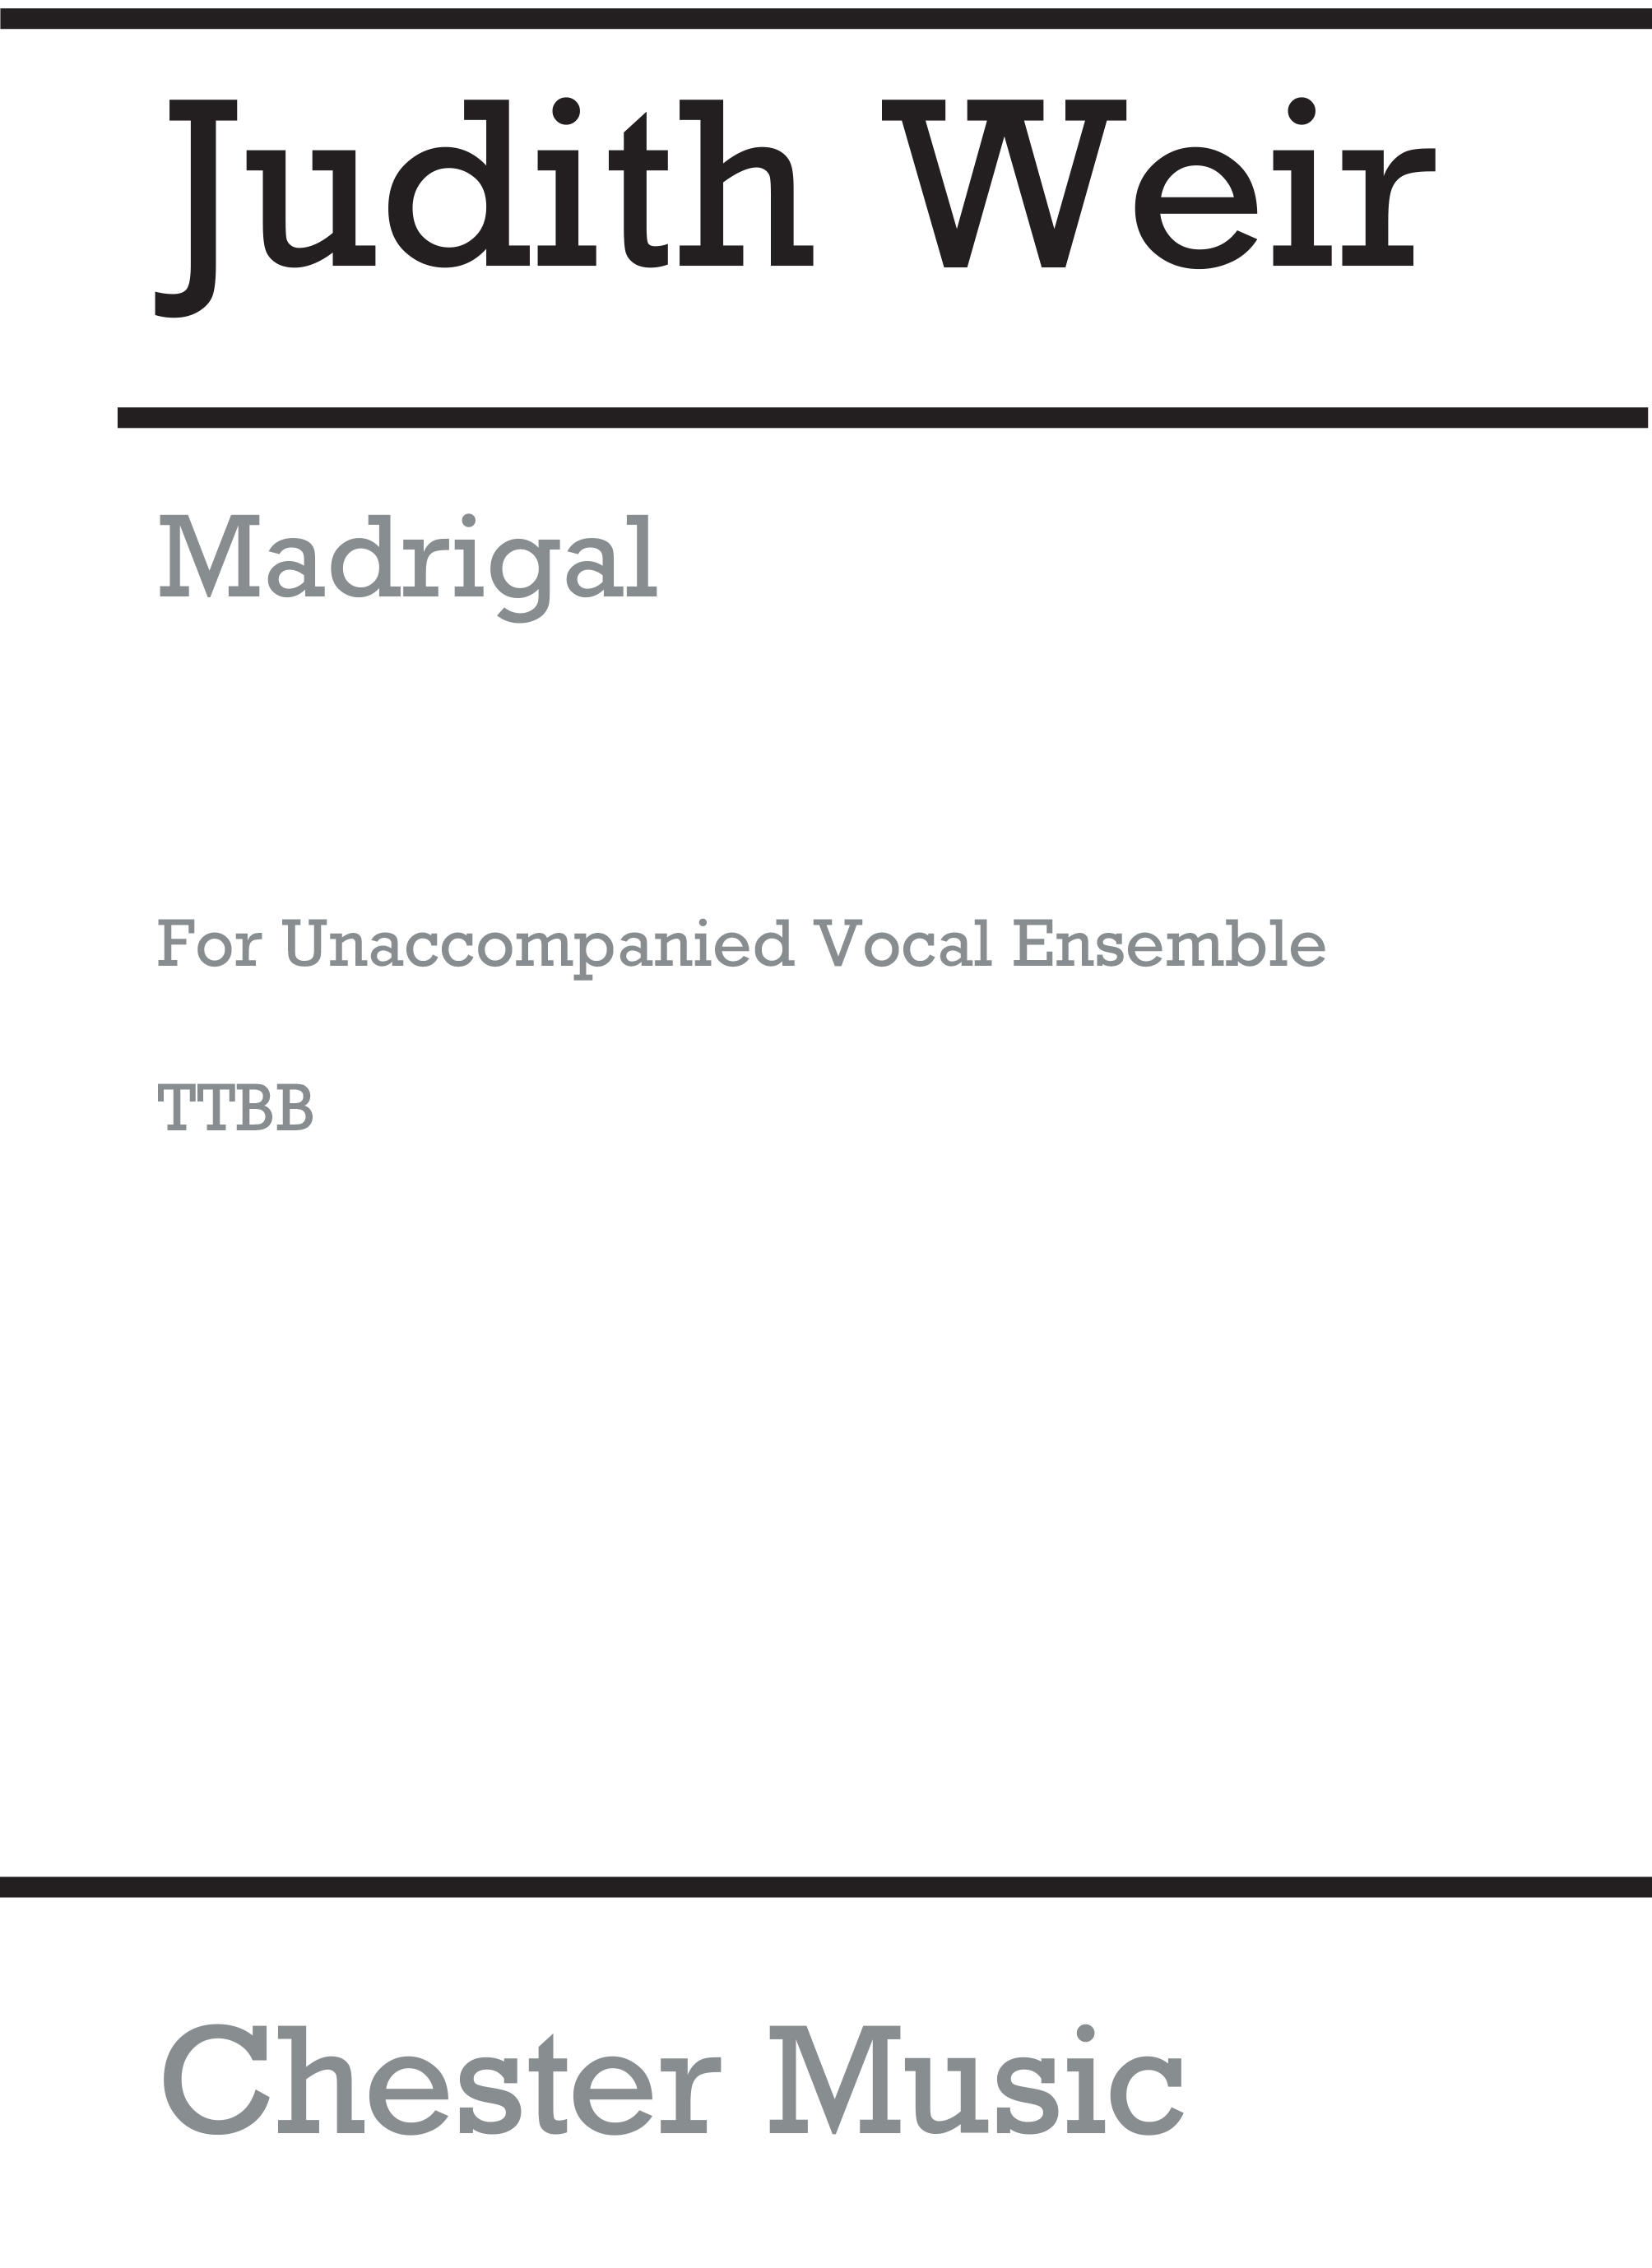 Judith Weir: Madrigal: Men's Voices: Vocal Score